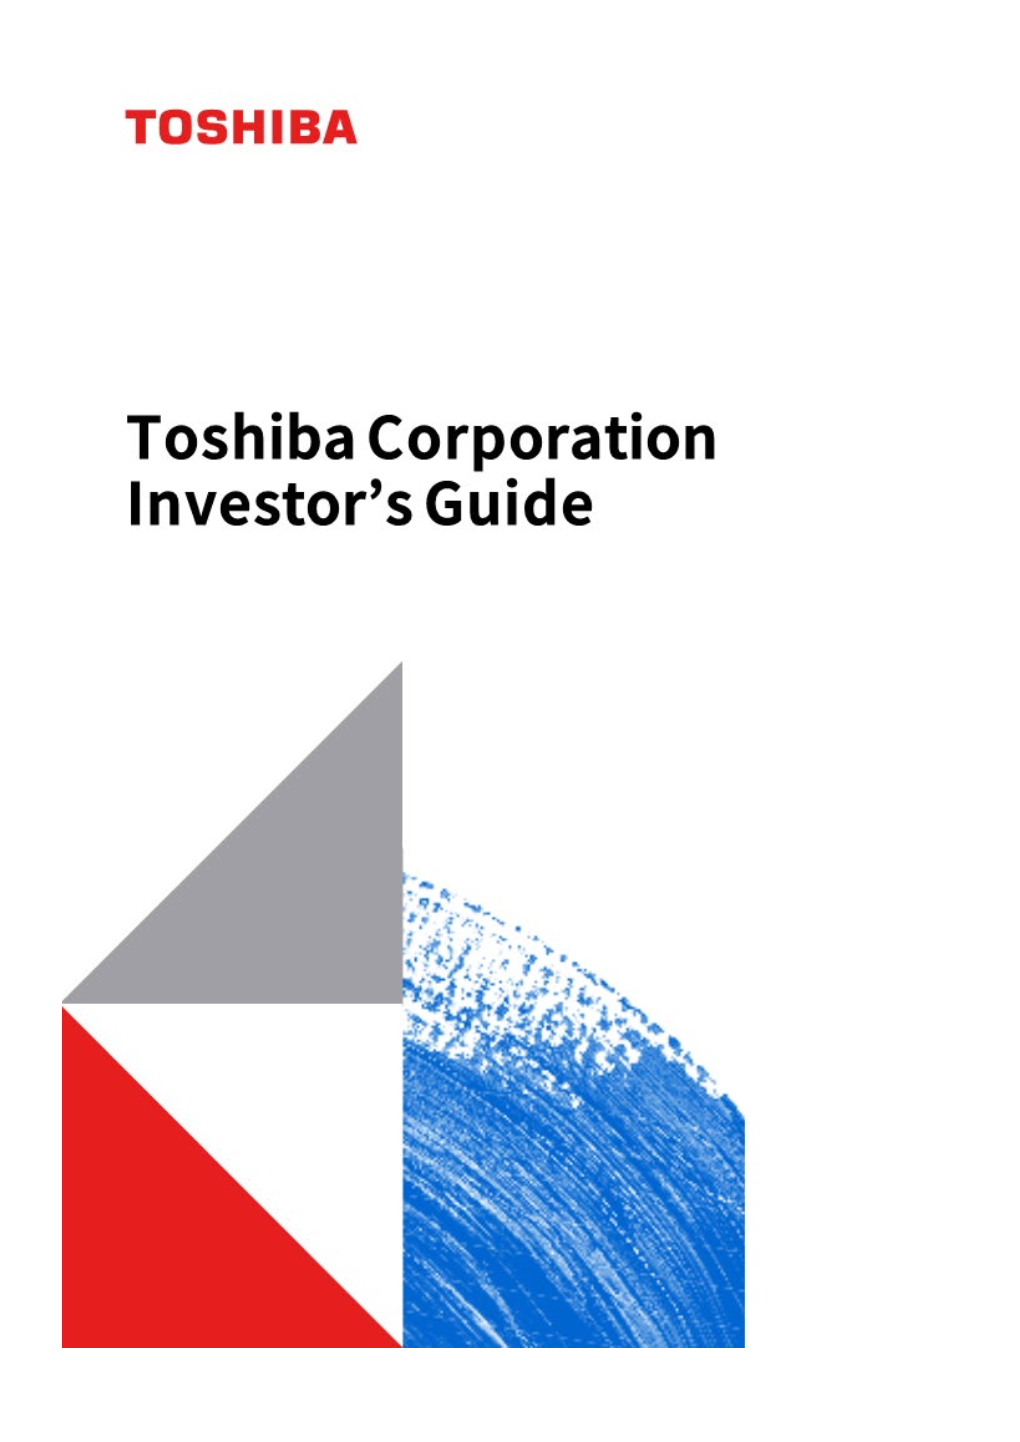 Investor's Guide